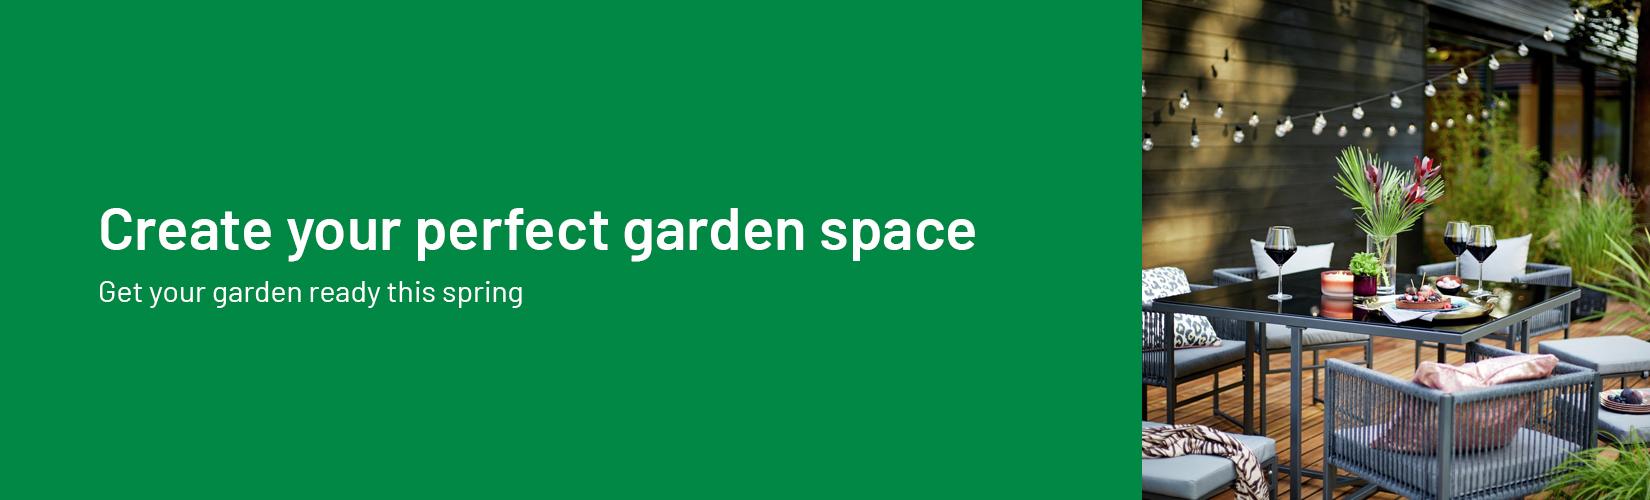 Create your perfect garden space. Get your garden ready this spring.